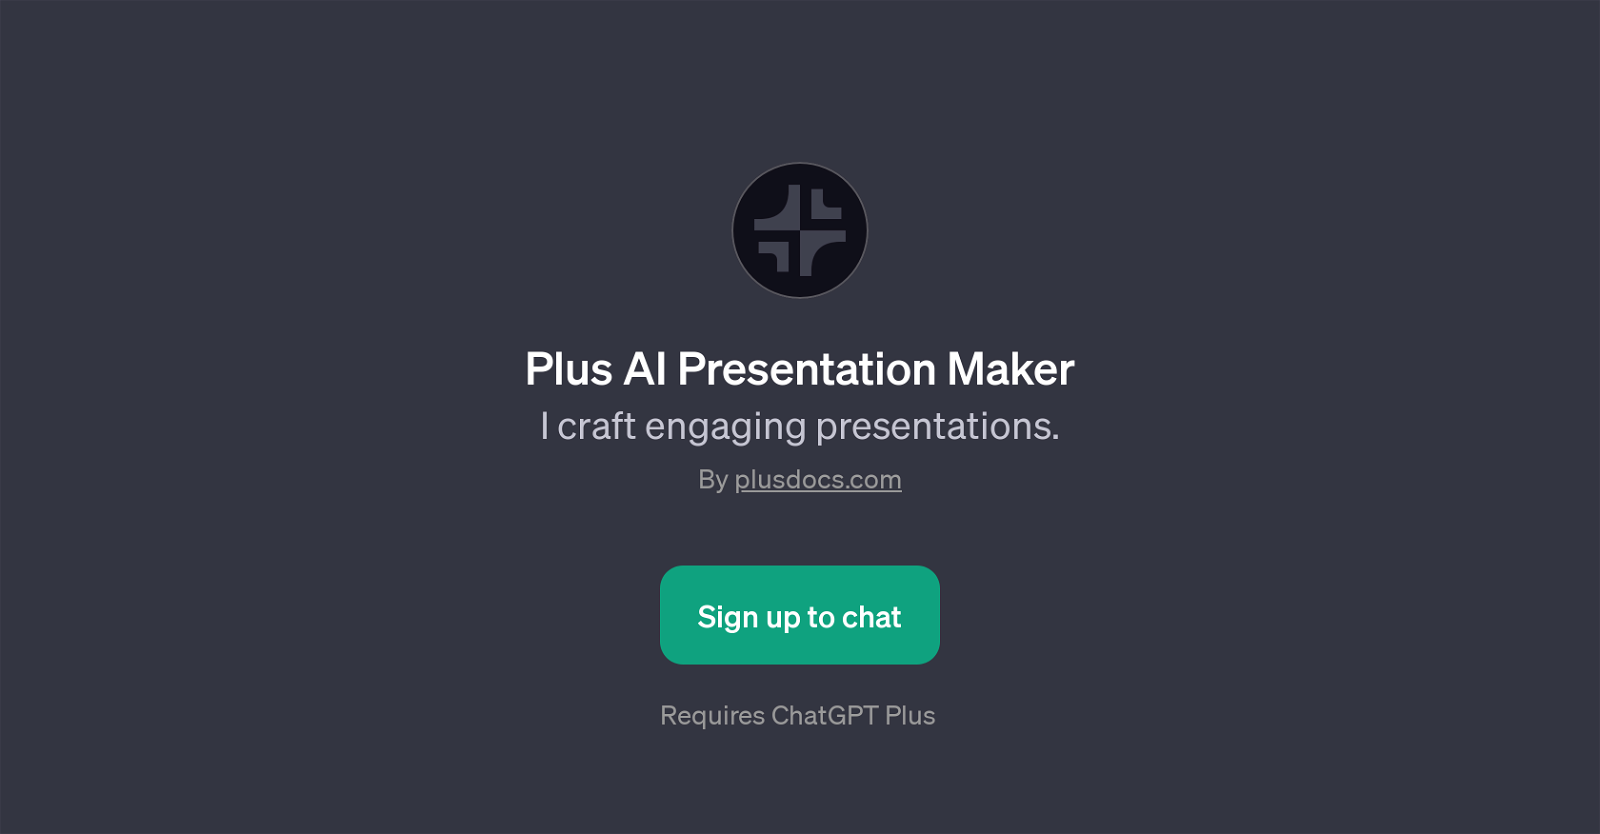 Plus AI Presentation Maker website